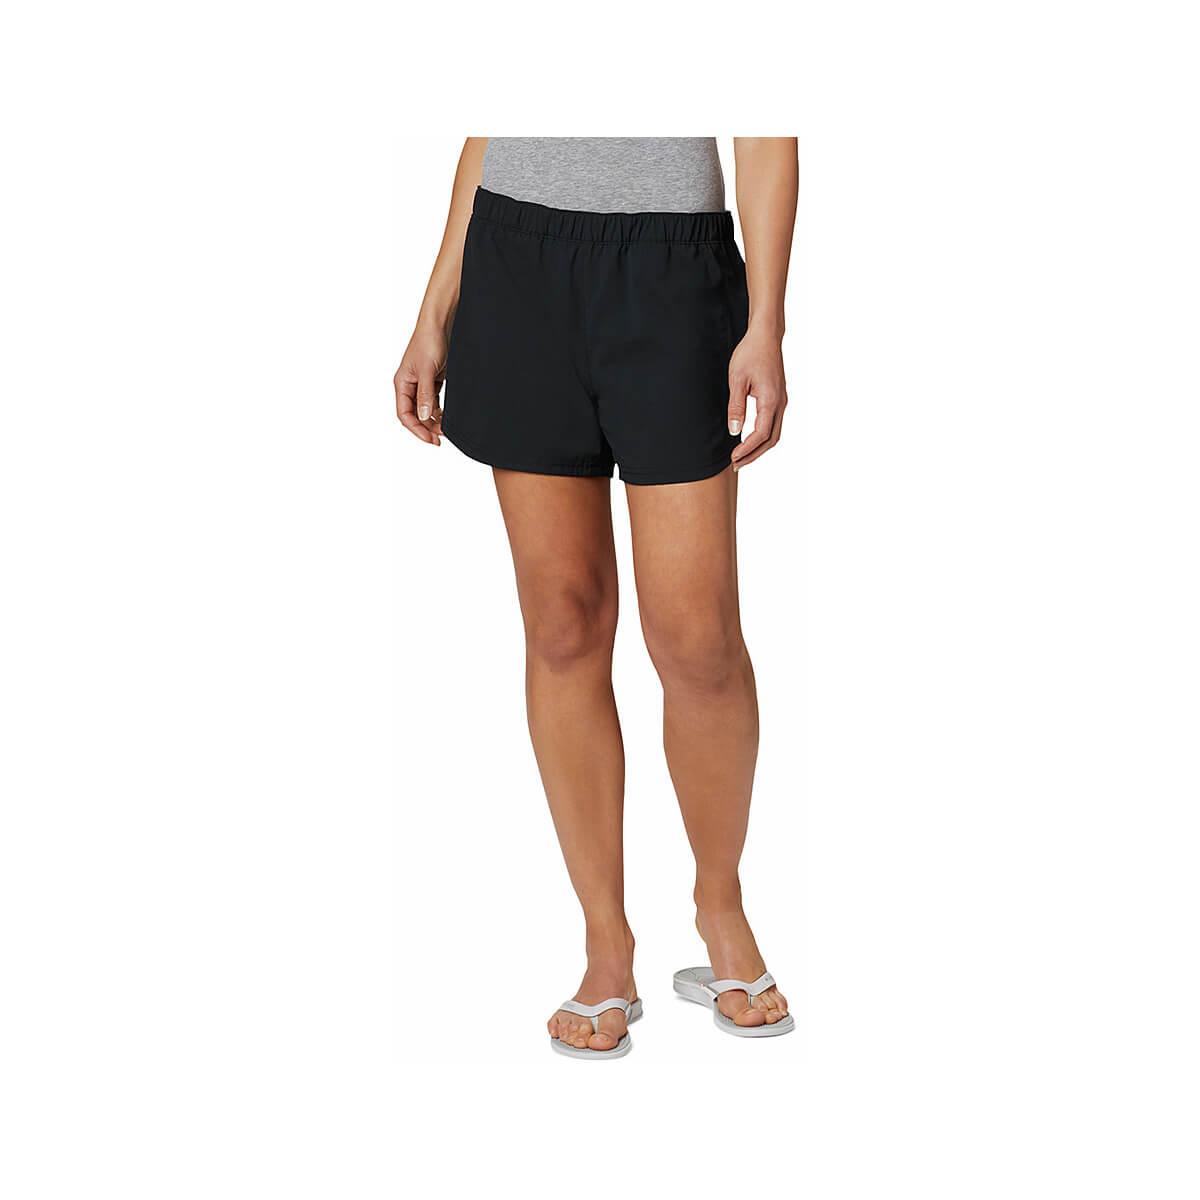  Women's Pfg Tamiami Pull On Shorts